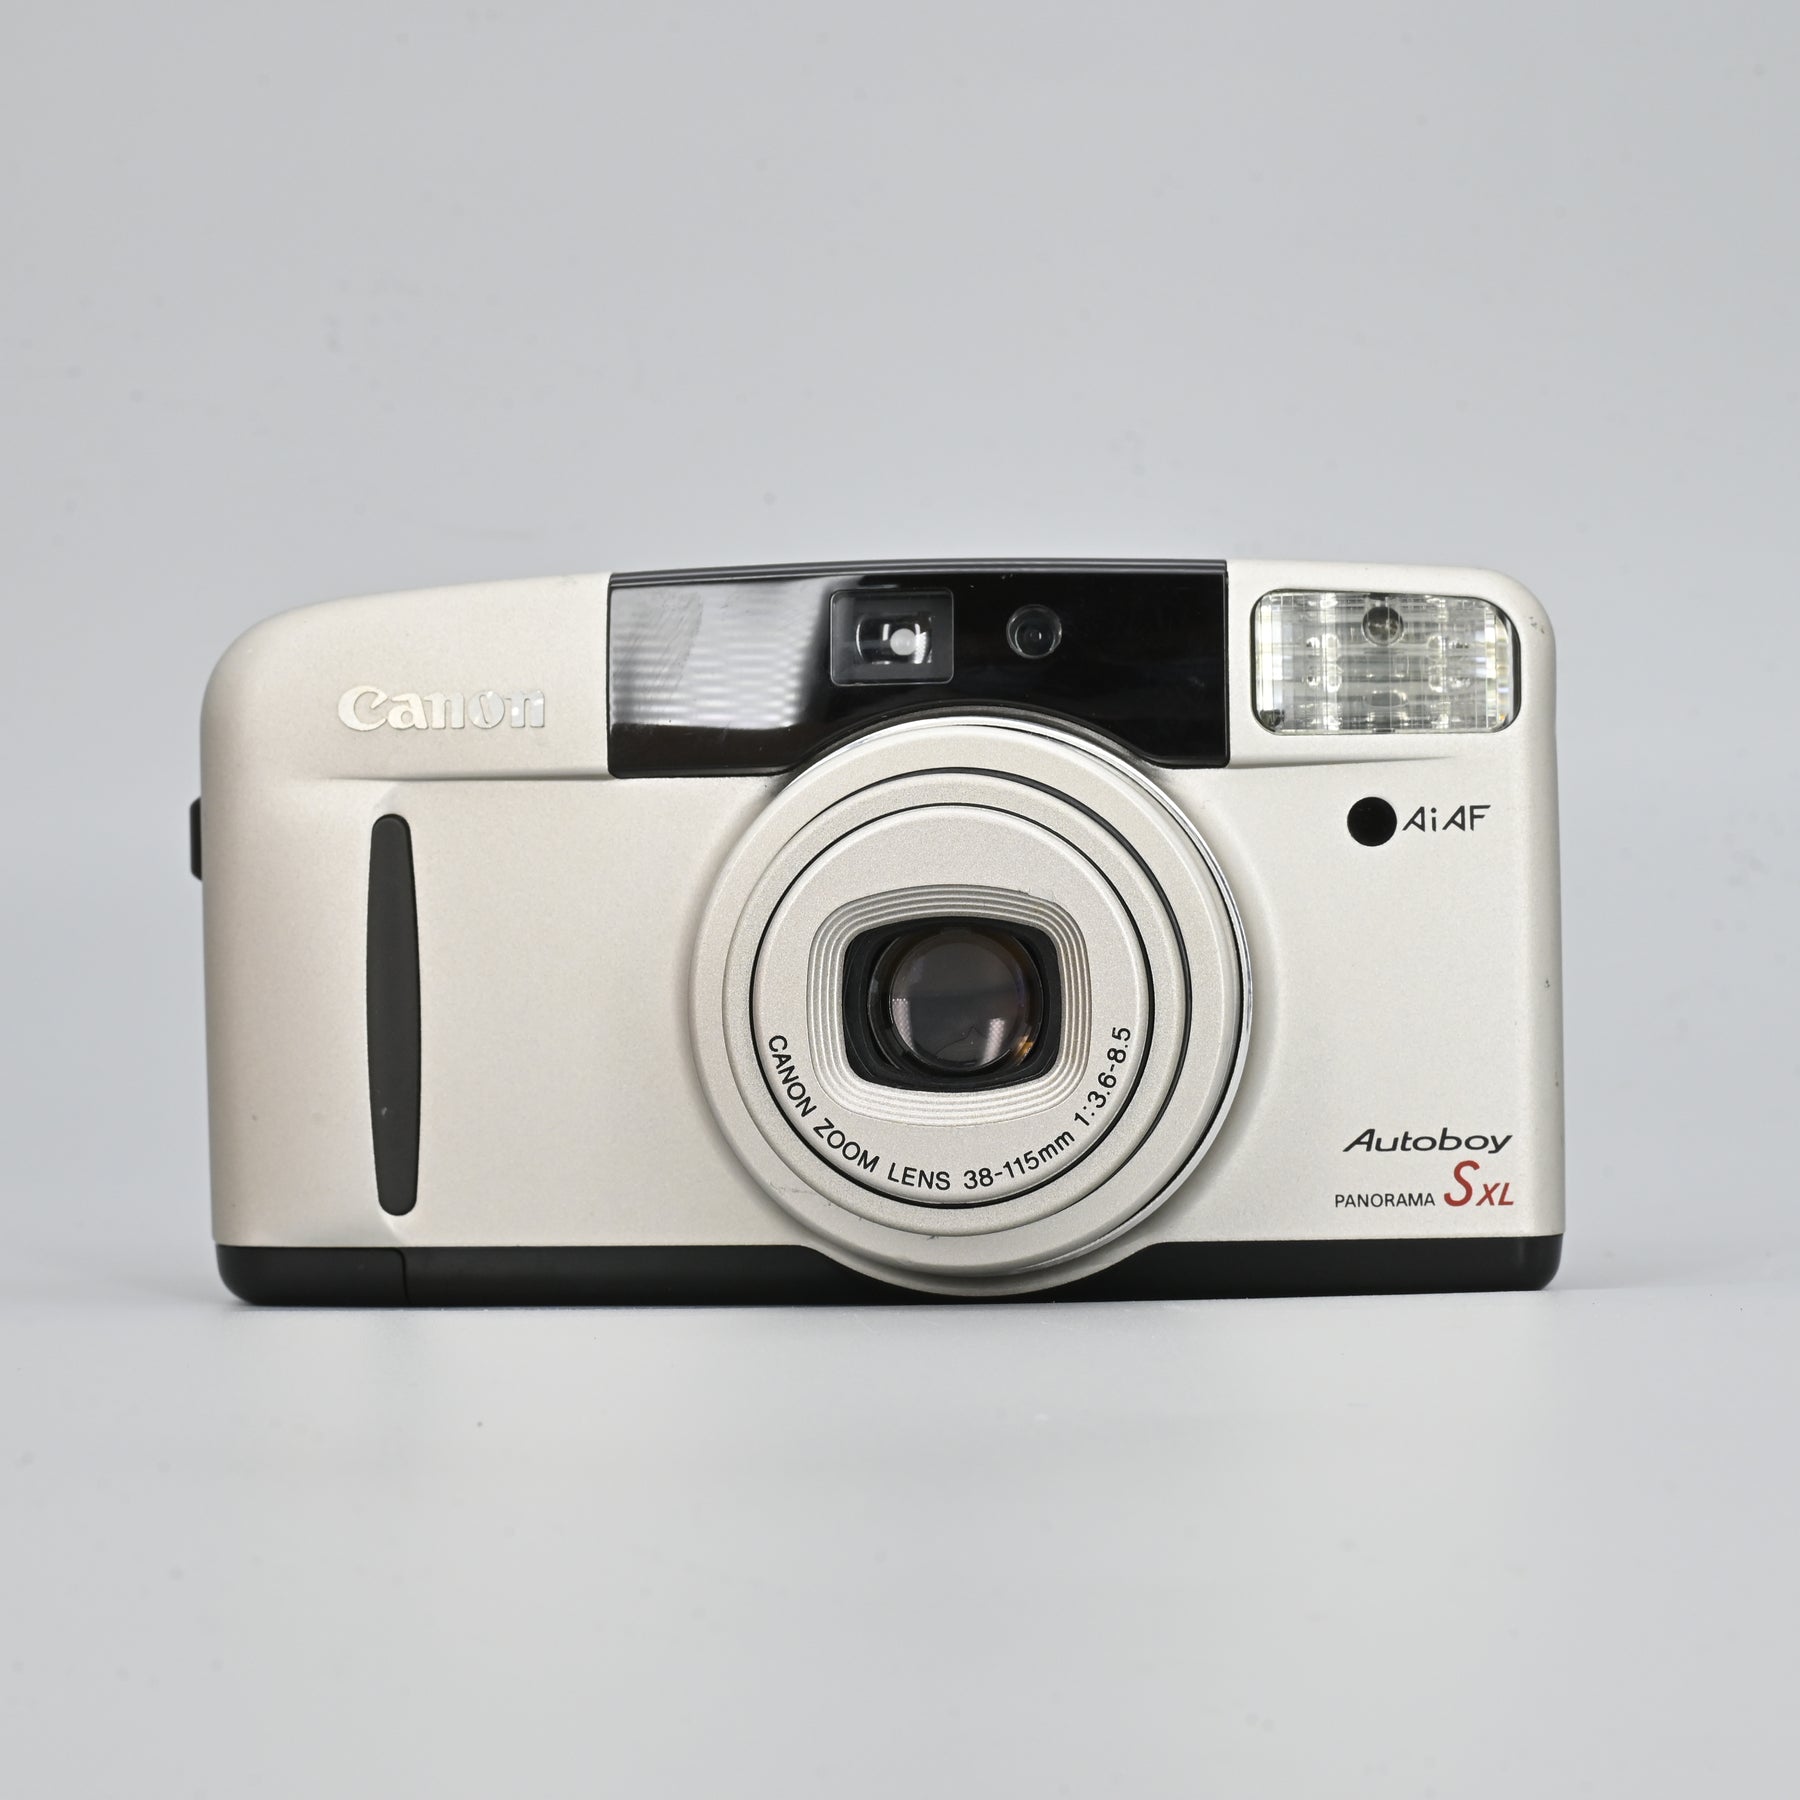 Canon Autoboy SXL Panorama Caption.